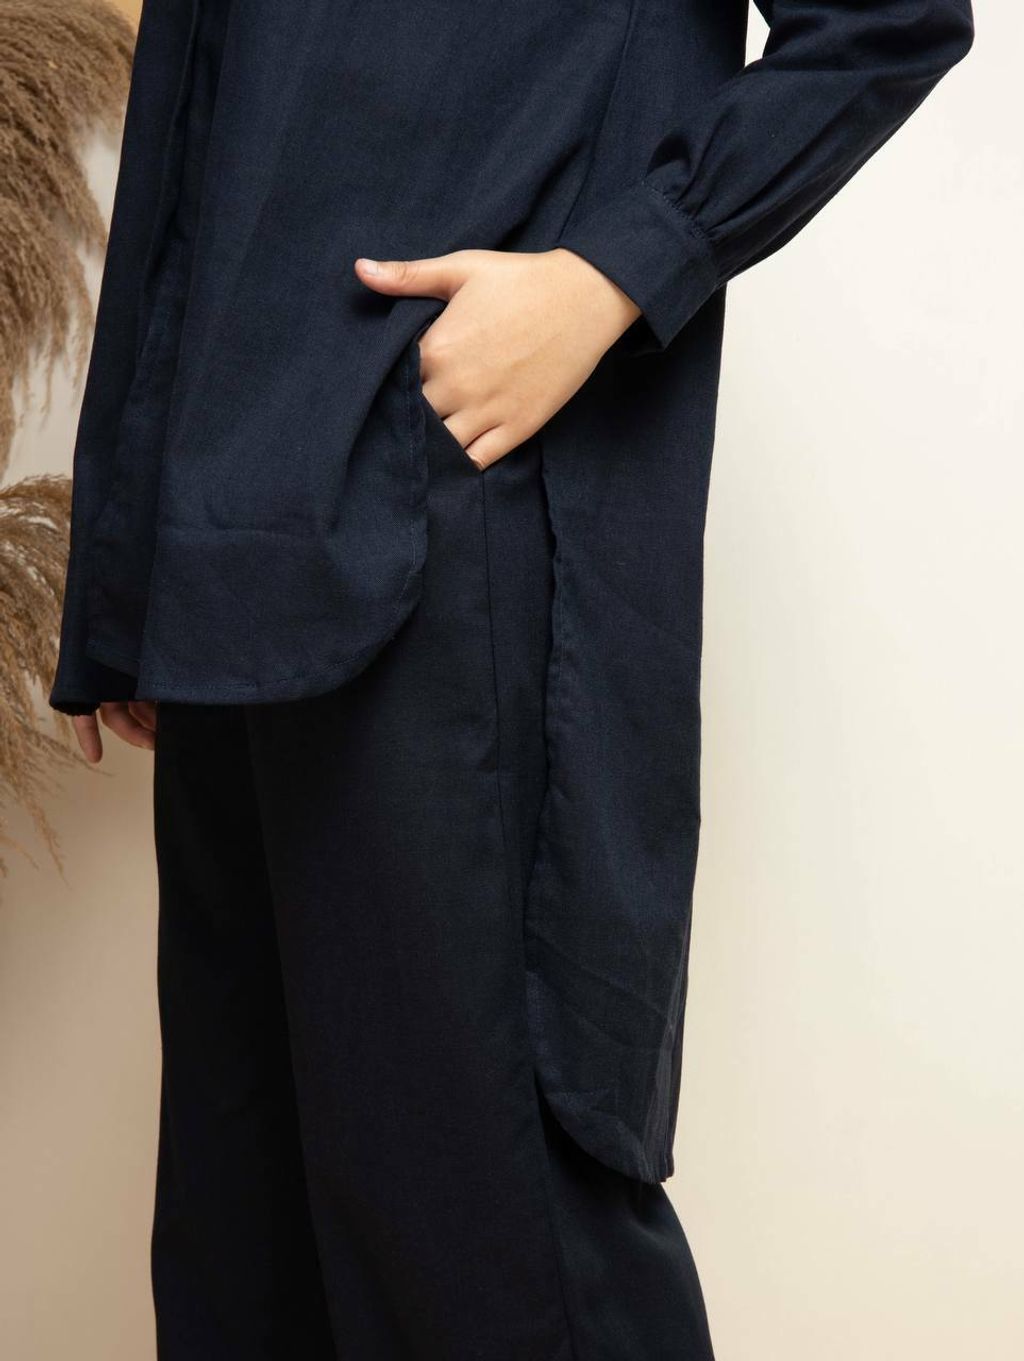 haura-wear-cotton-premium-baju-muslimah-set-seluar-suit-muslimah-set-baju-dan-seluar-muslimah-palazzo (11).jpg